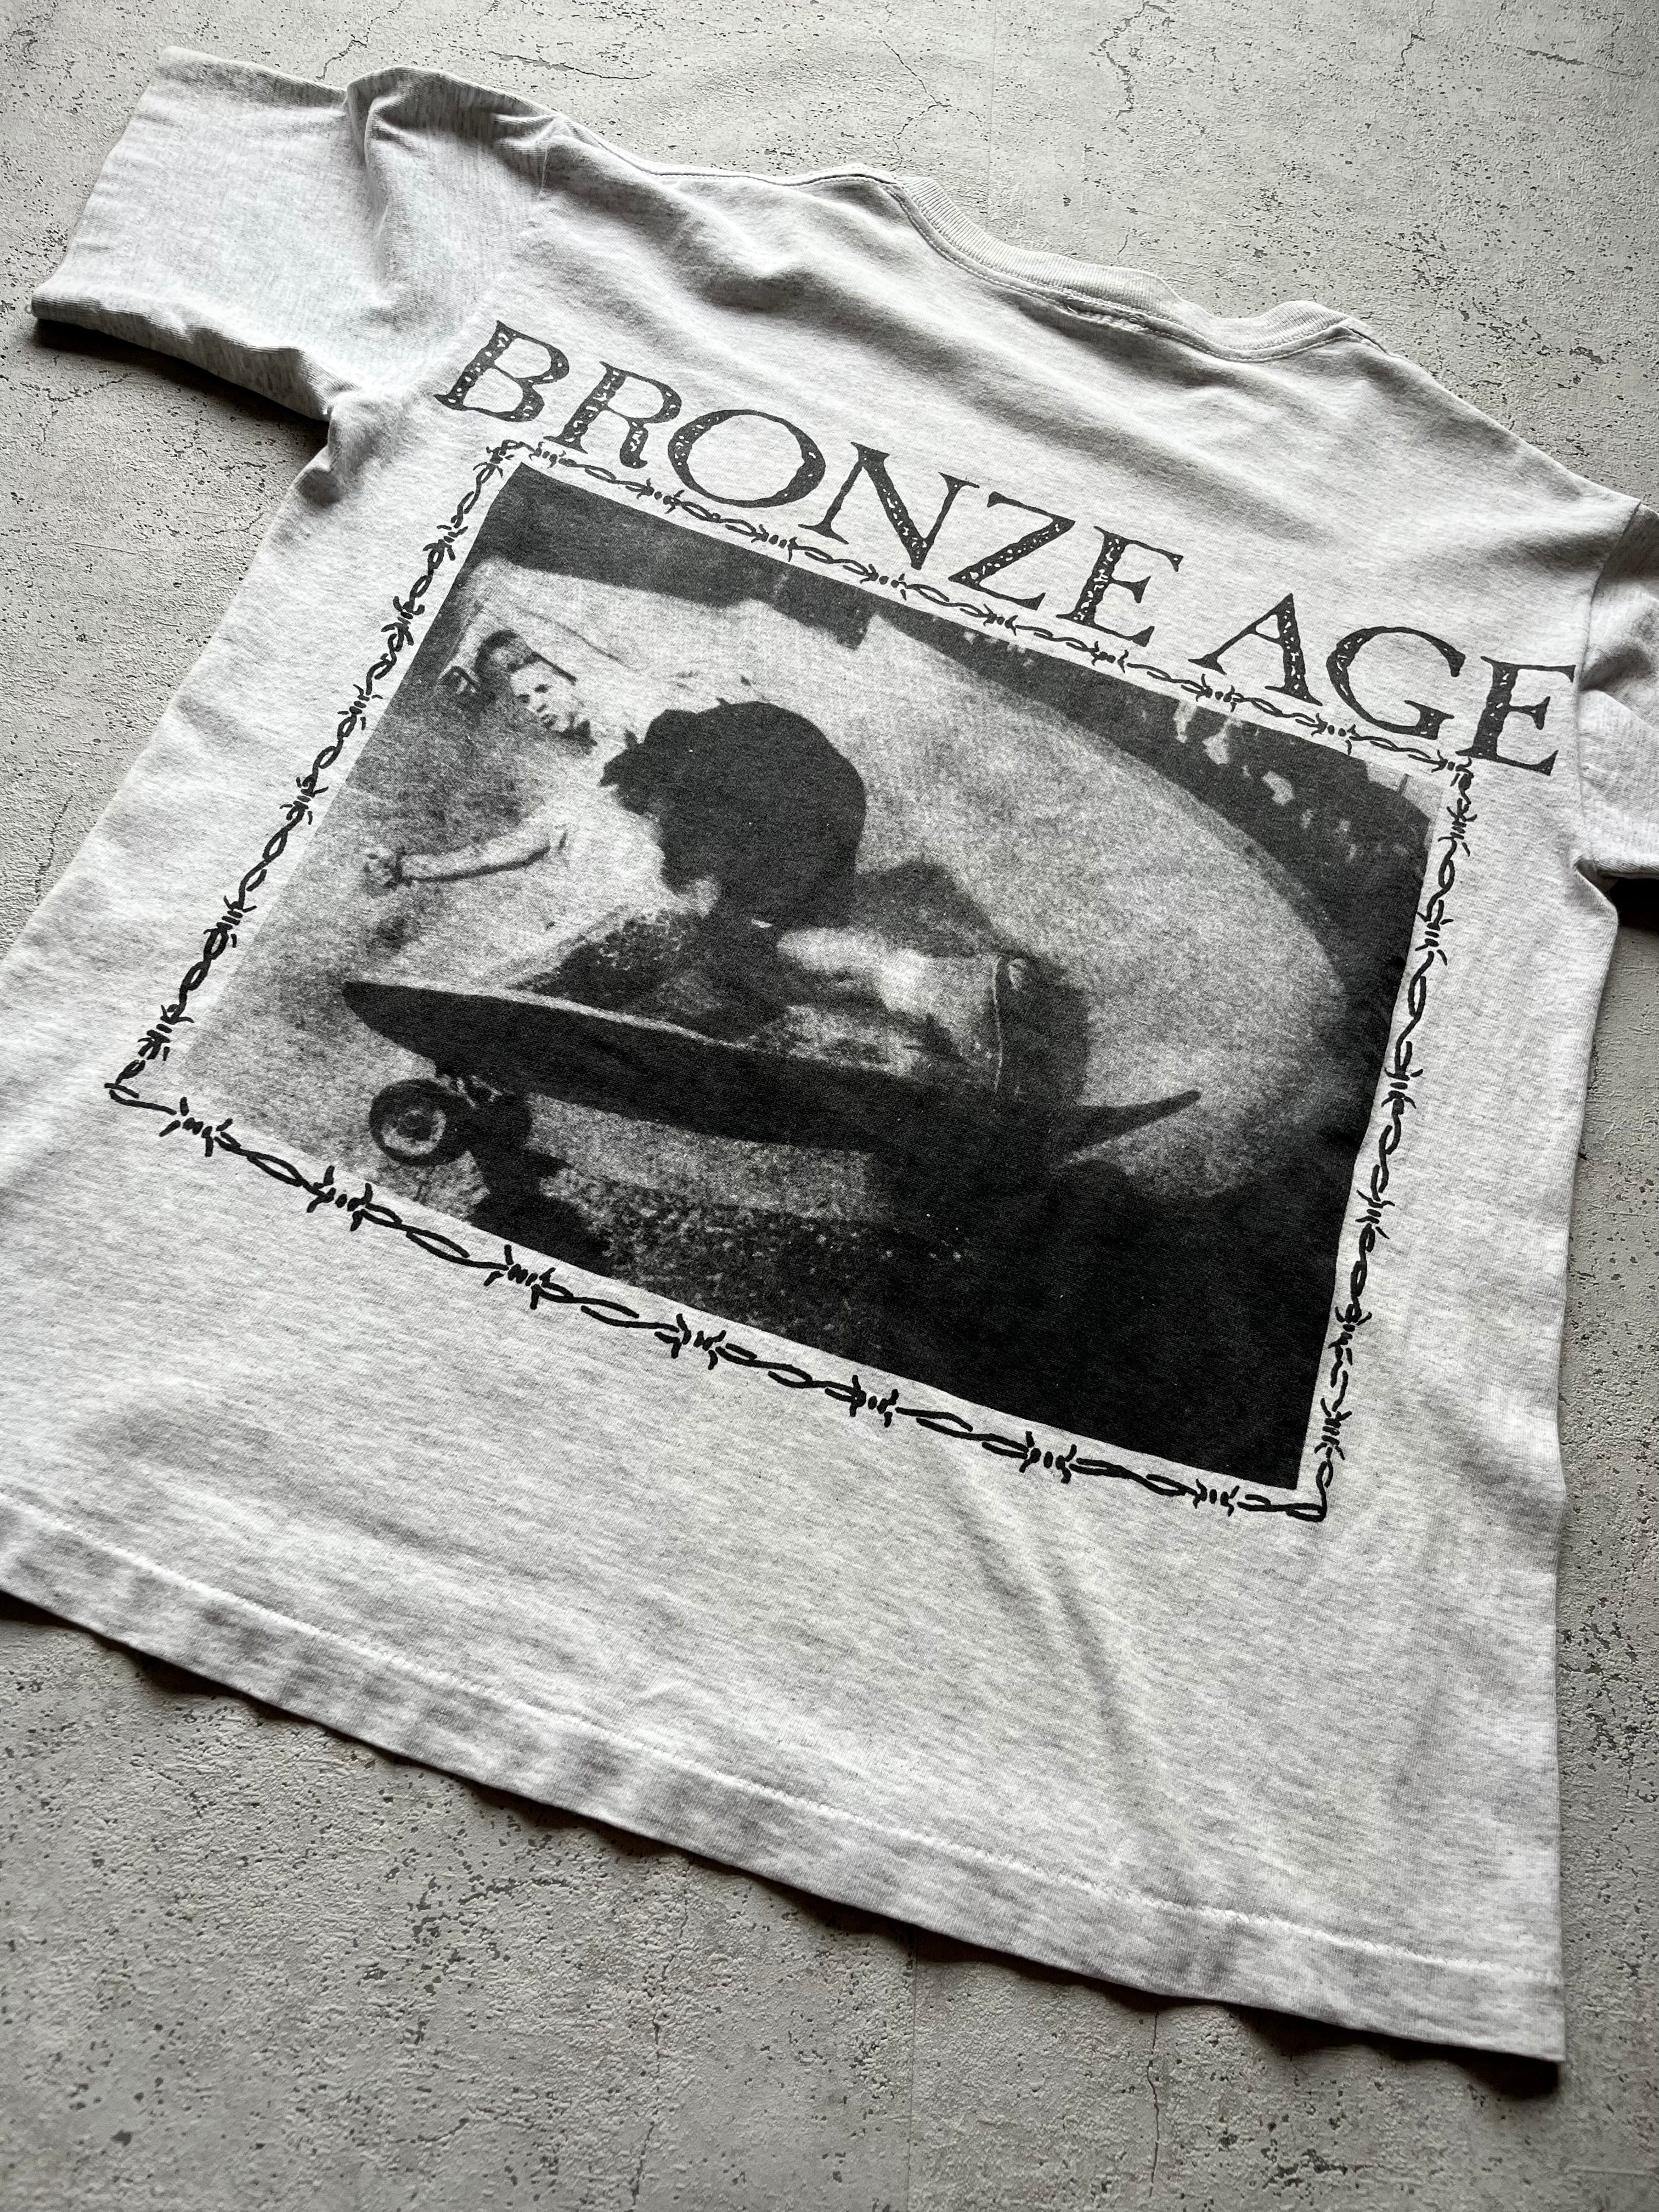 BRONZE AGE スケートTシャツ US企画90'sデザインL